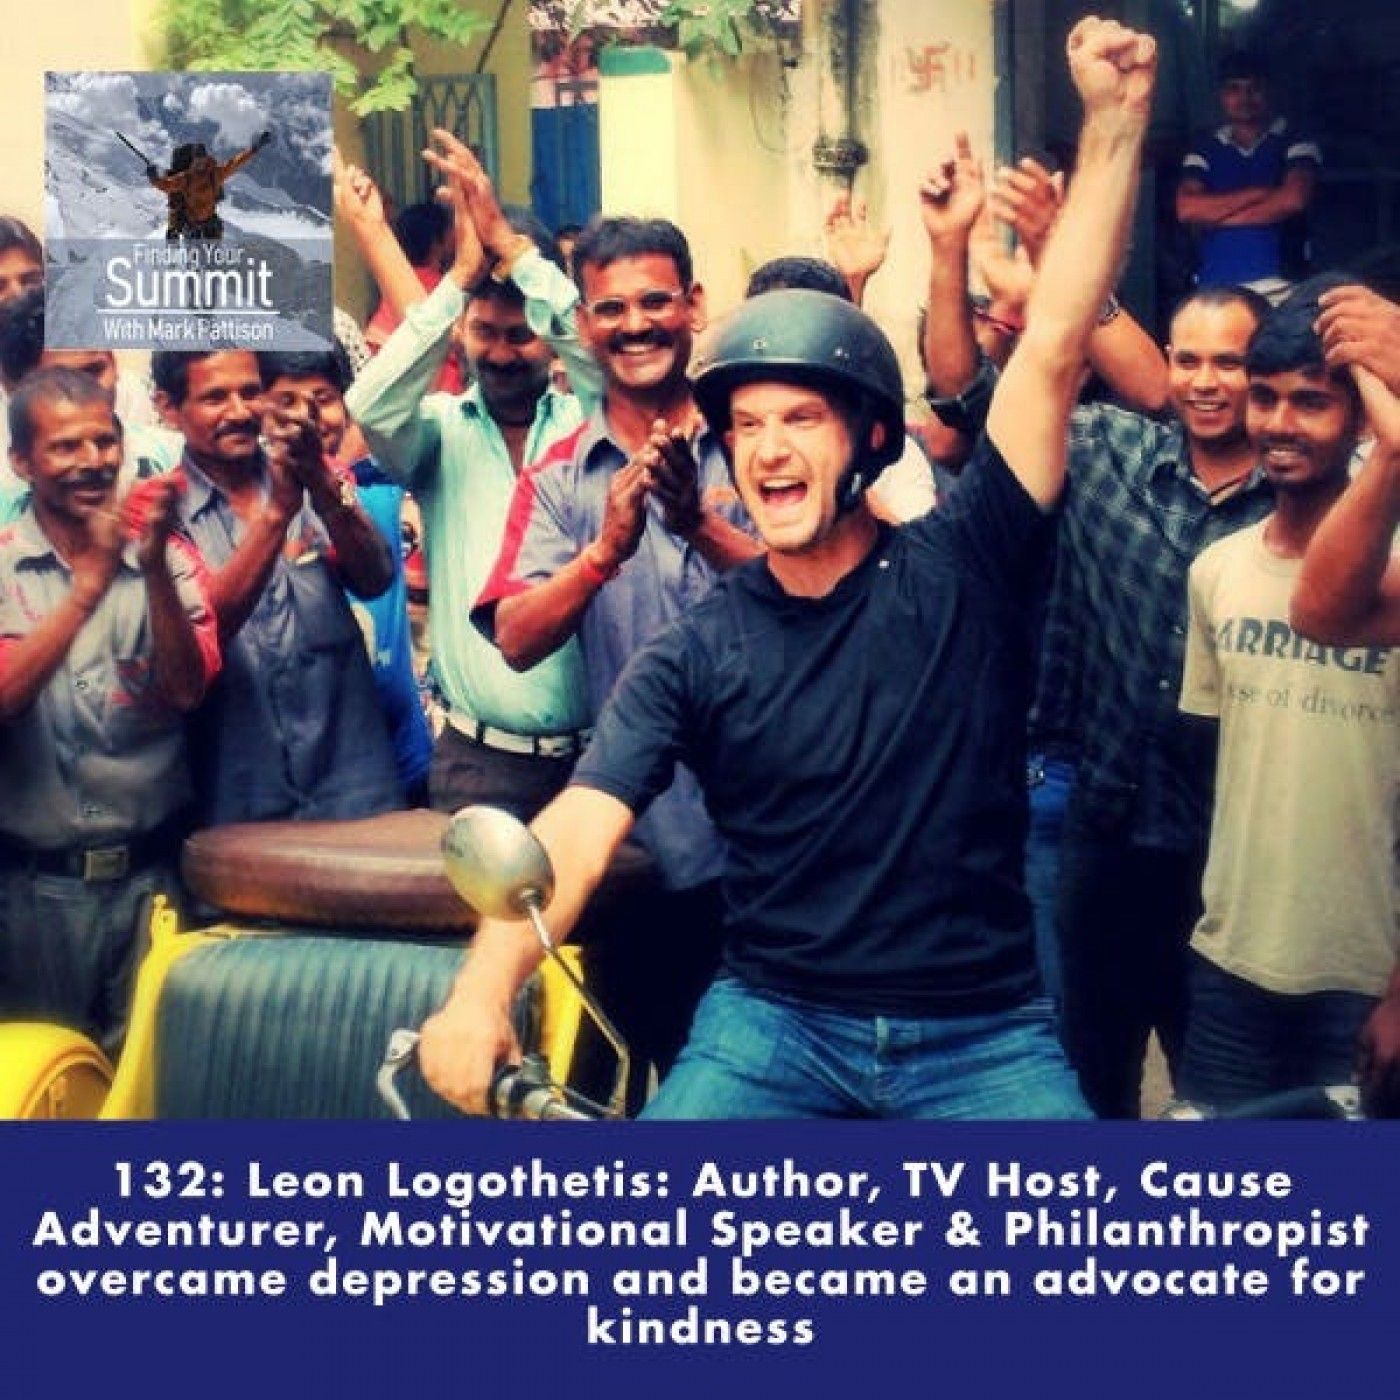 Leon Logothetis: Author, TV Host, Cause Adventurer, Motivational Speaker & Philanthropist overcame depression and became an advocate for kin